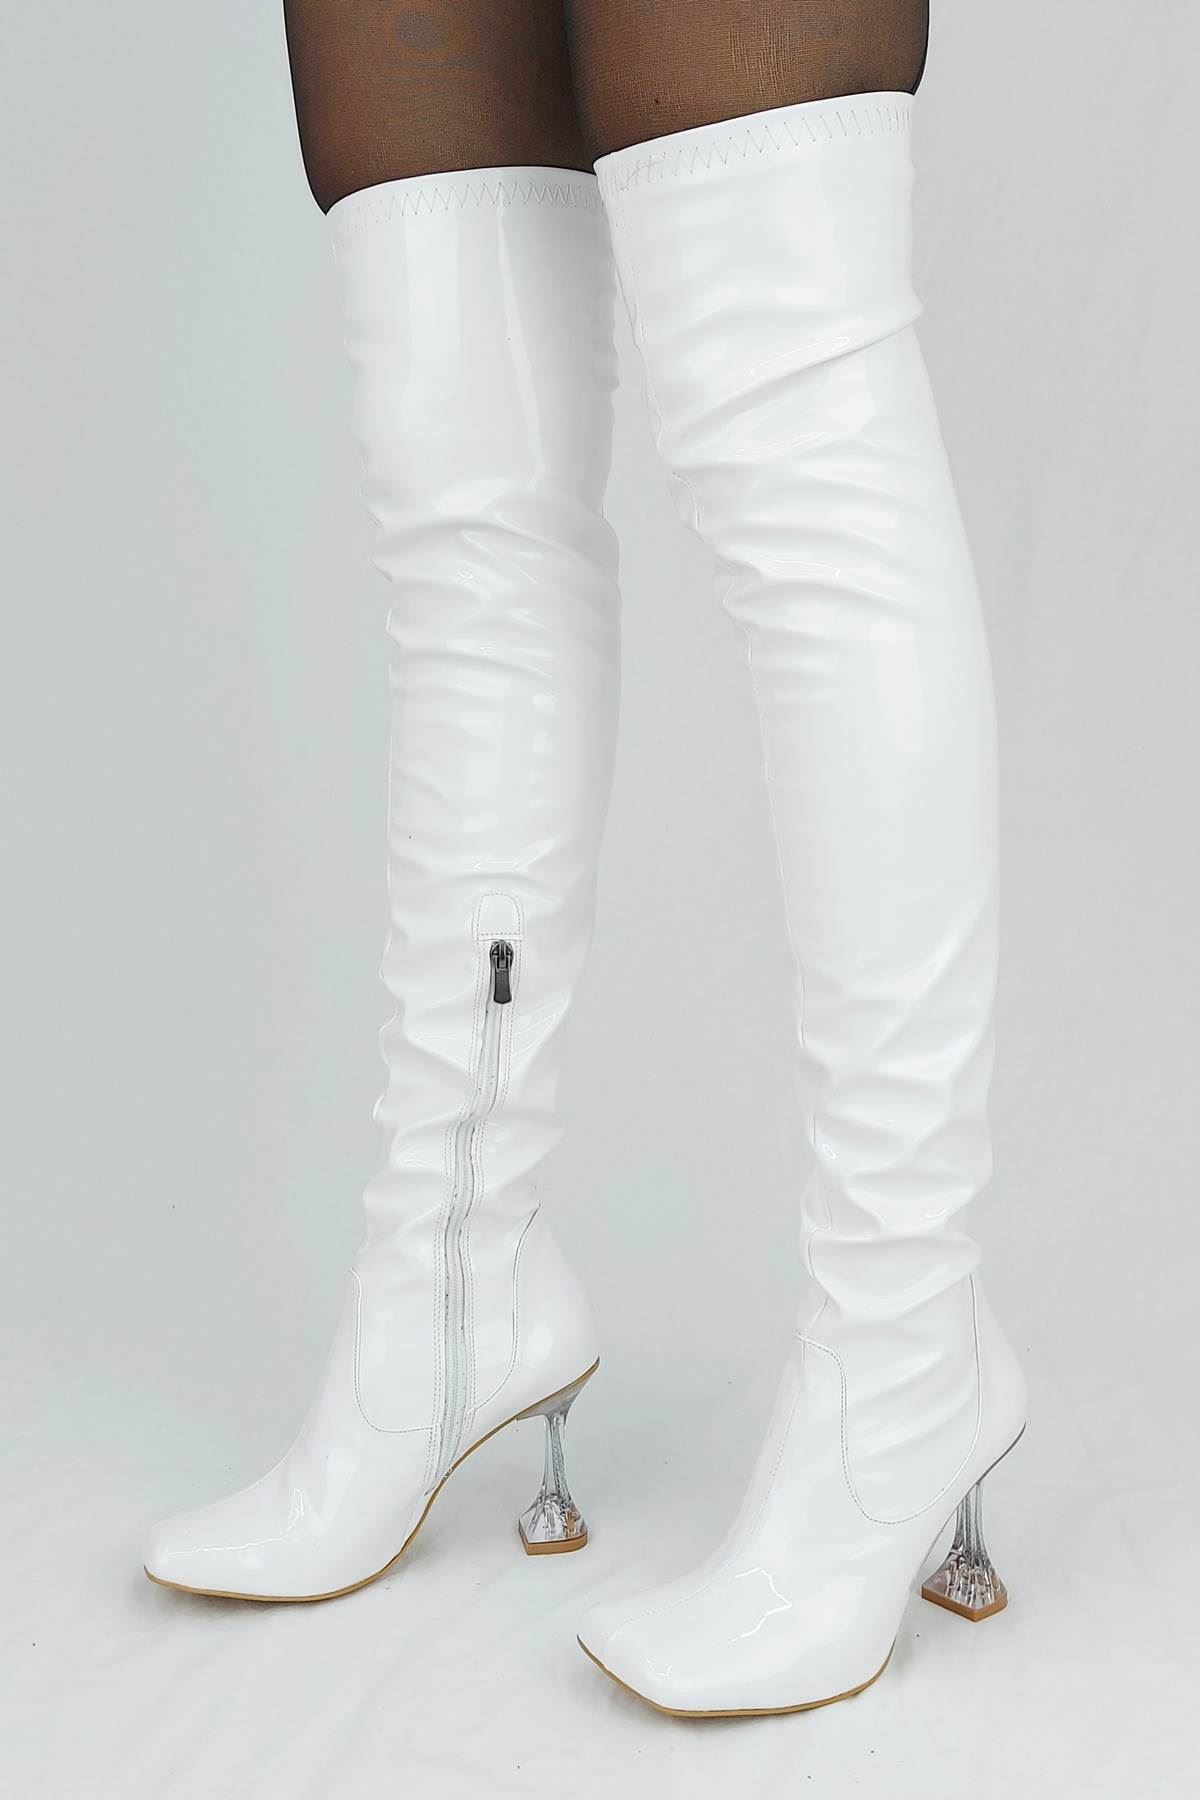 İvan Beyaz Cilt Fashion Topuklu Diz Üstü Çizme